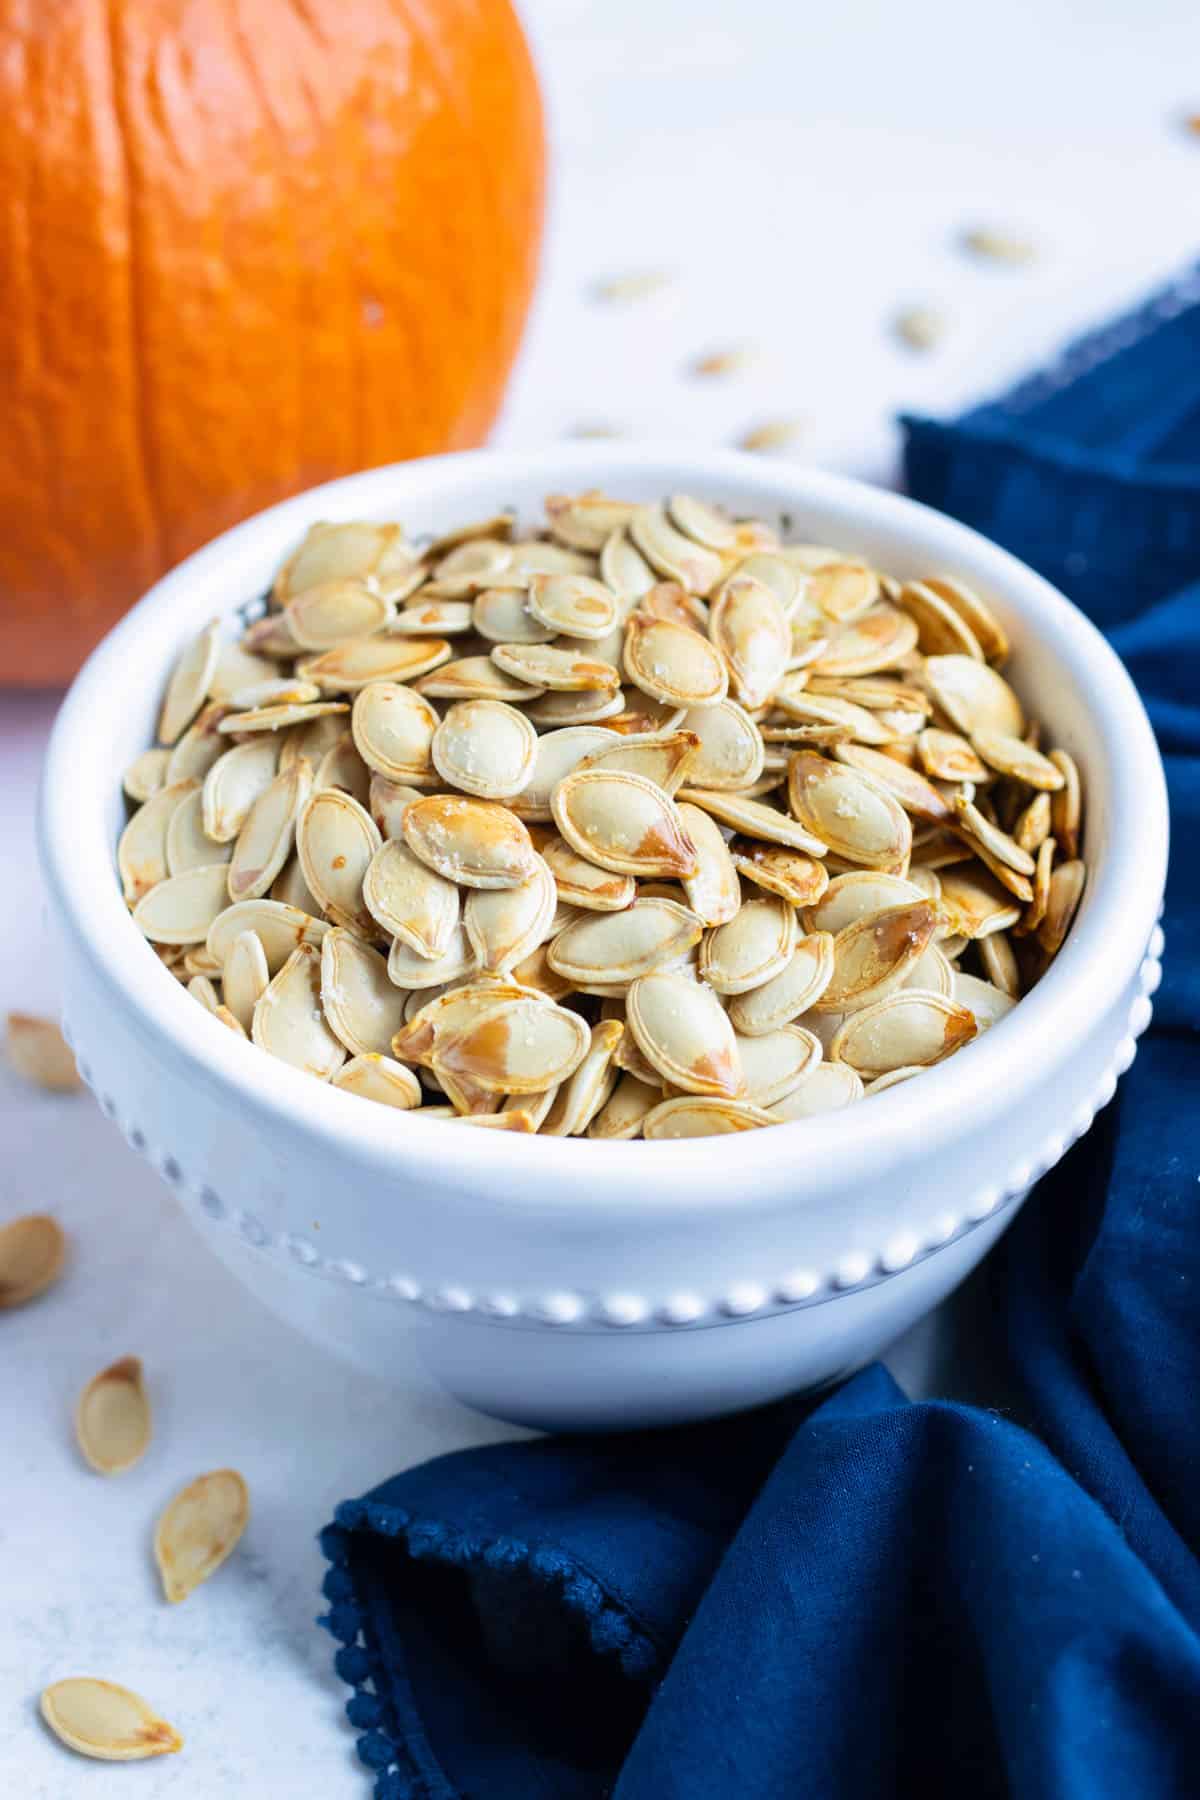 Pumpkin seeds in a white bowl with a pumpkin behind it.